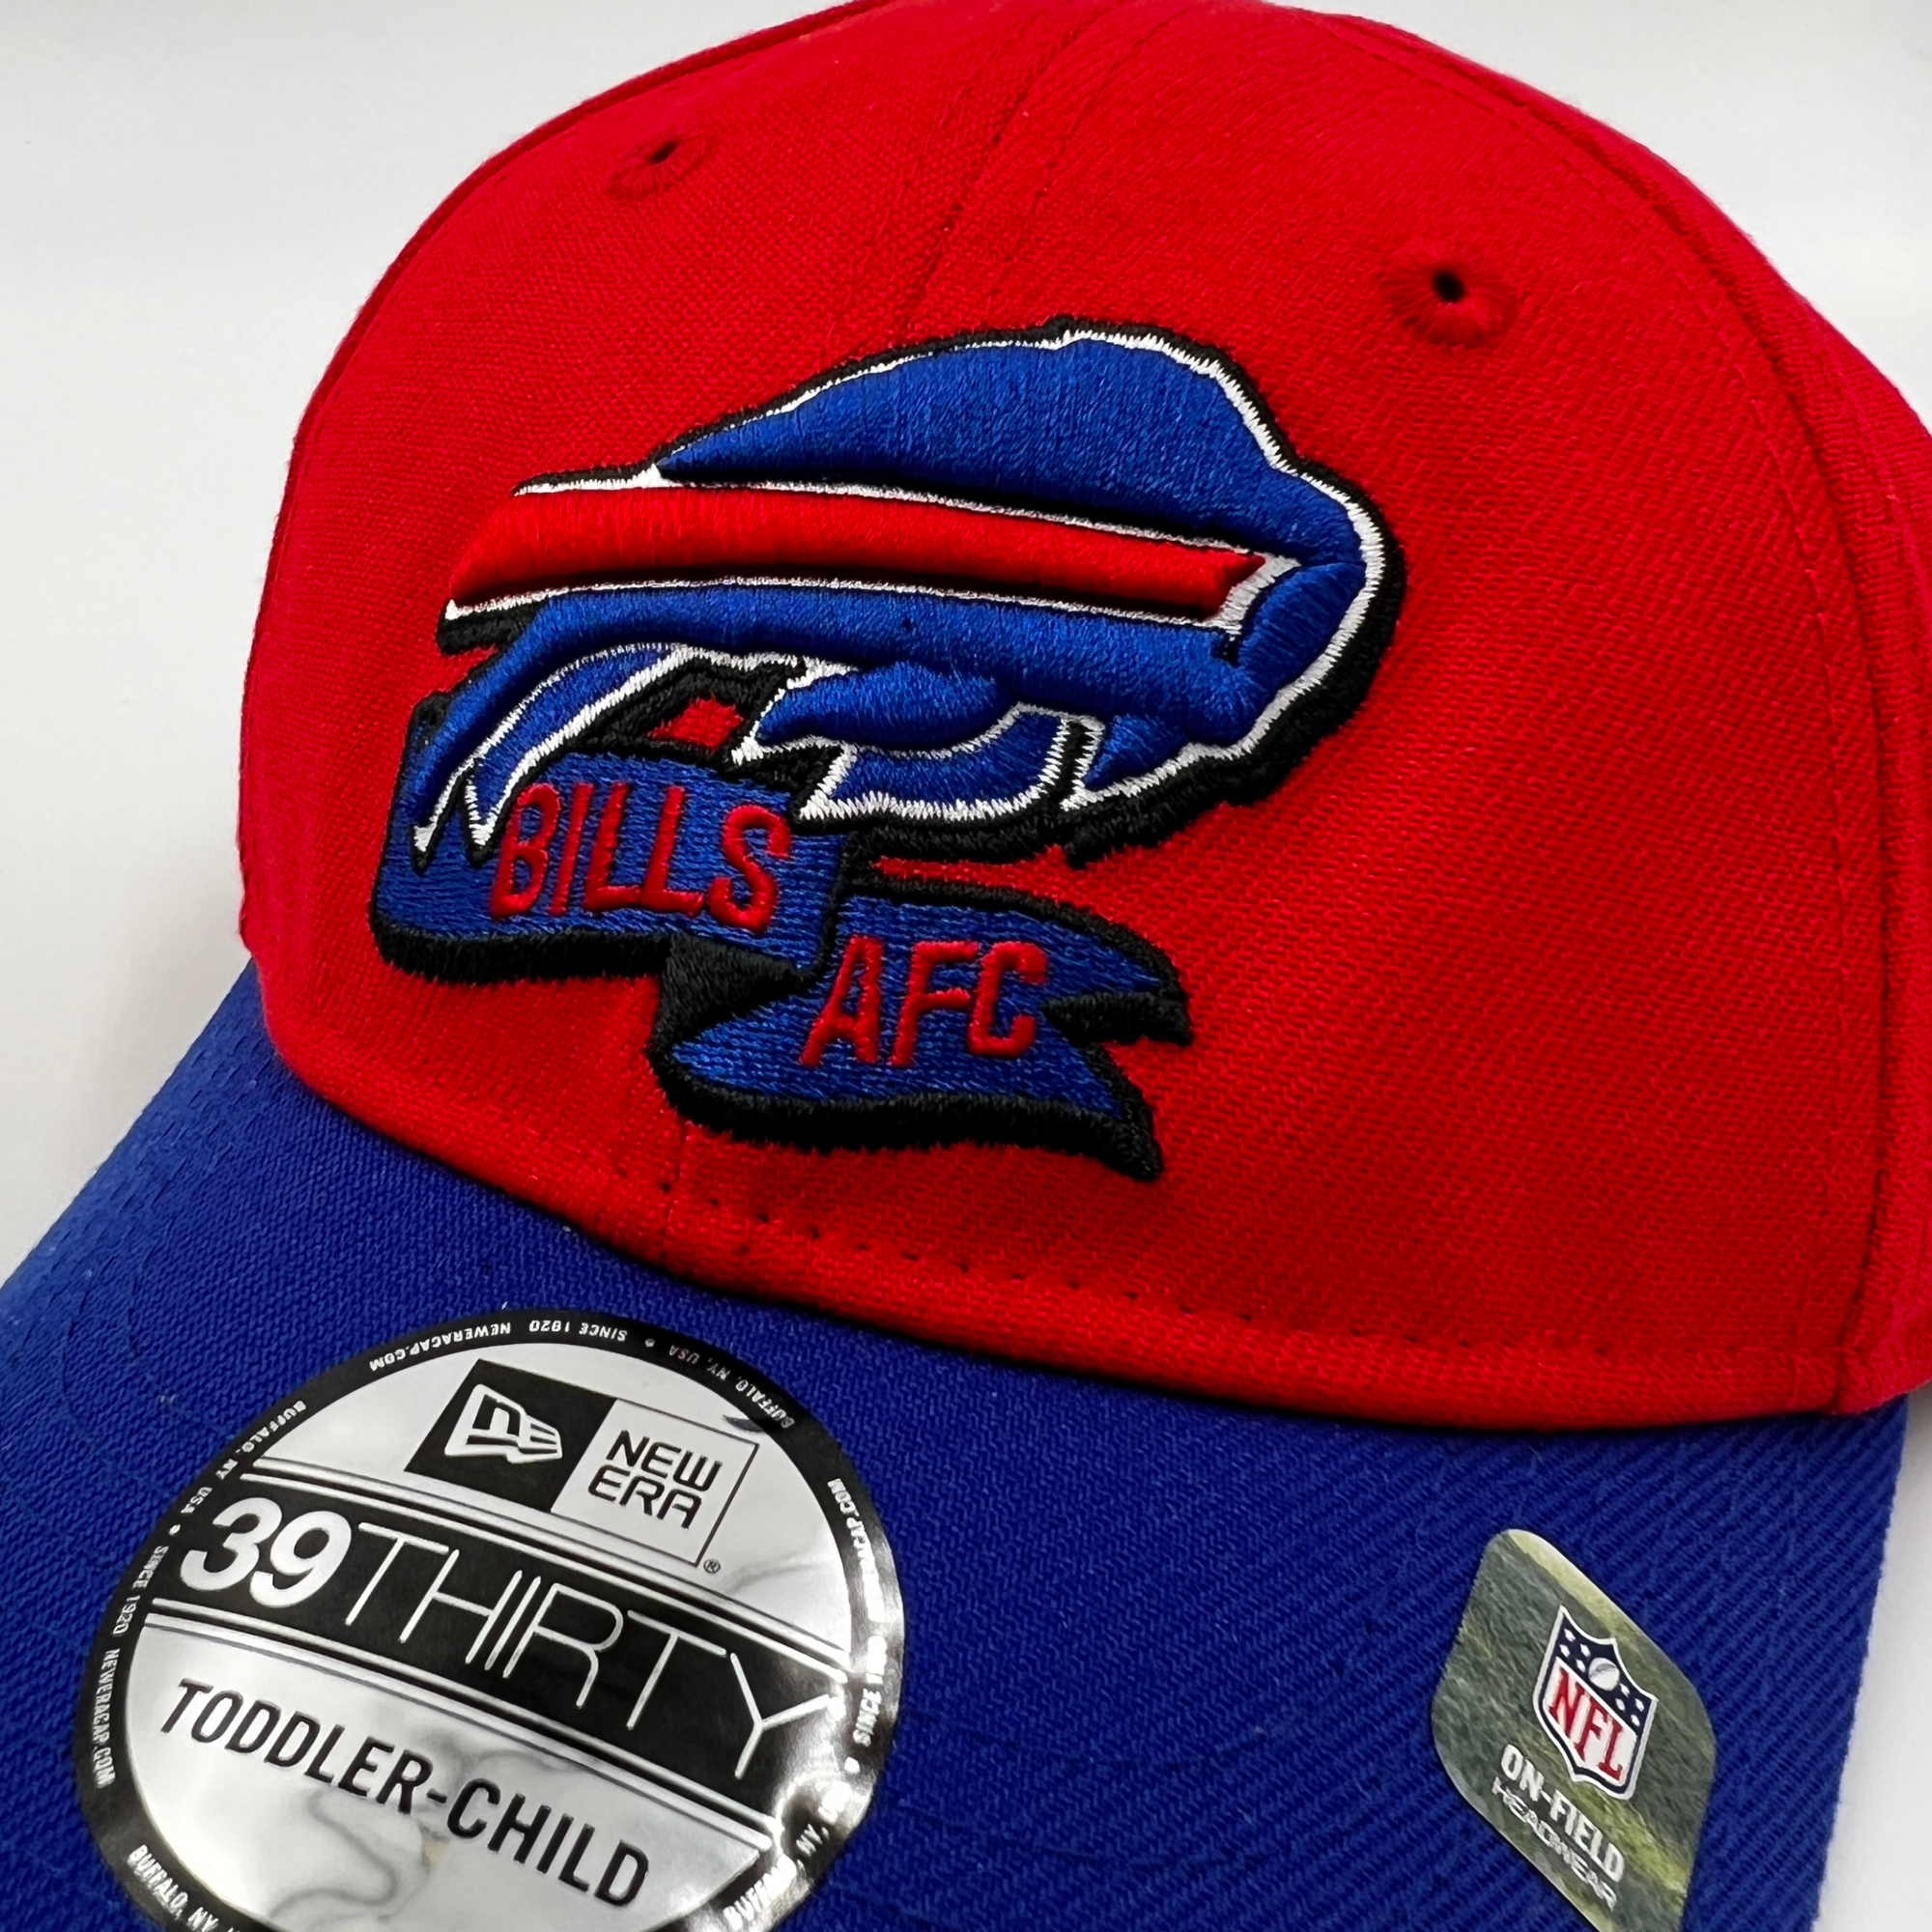 Toddler New Era Bills AFC Red Stretch Fit Hat